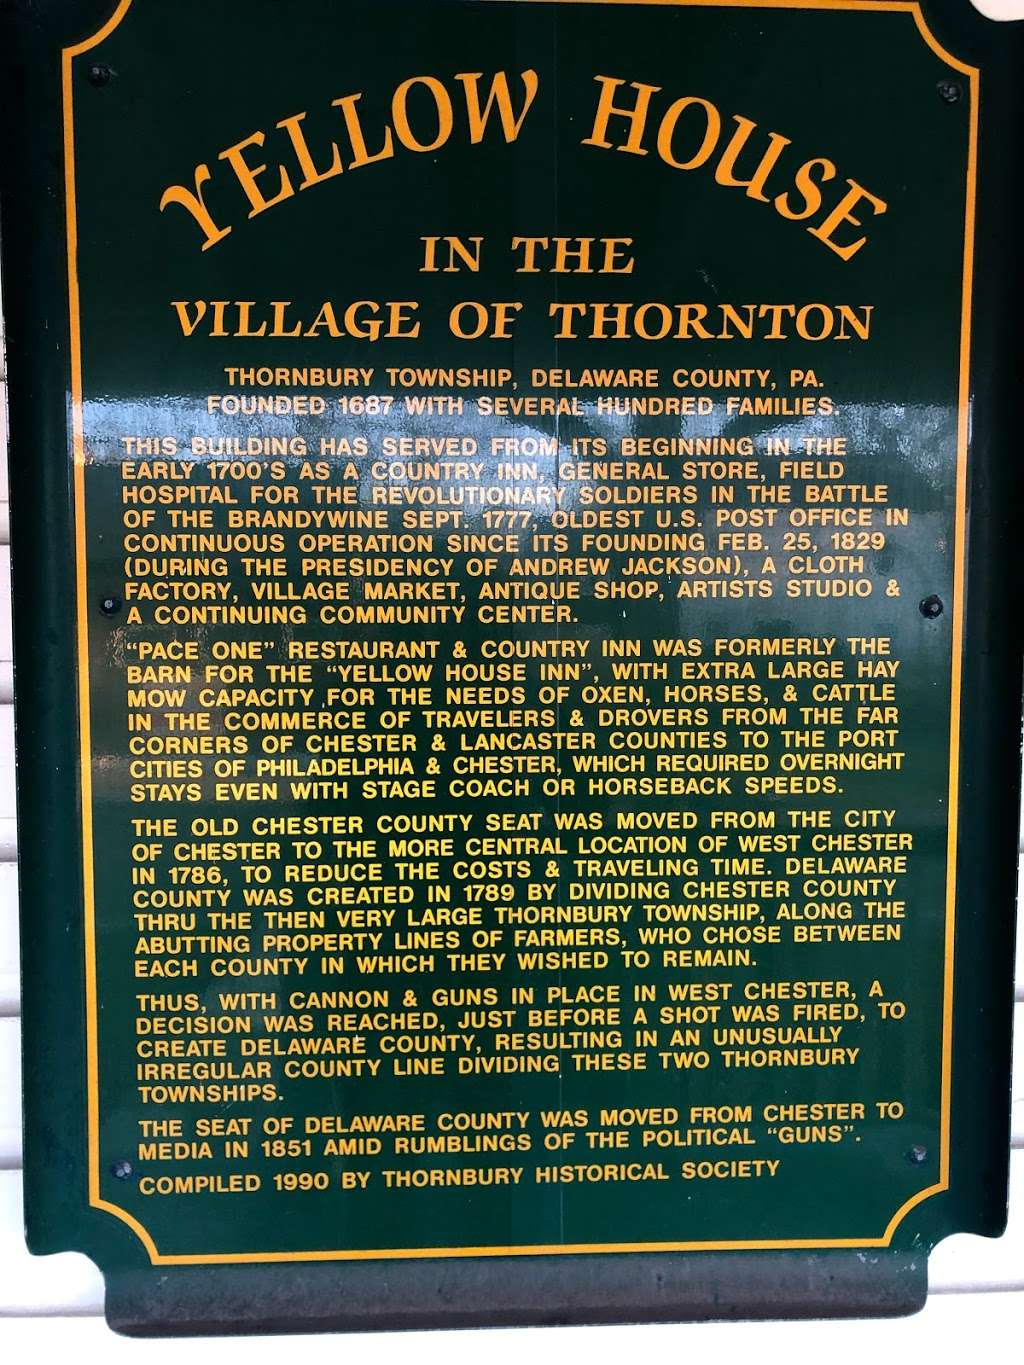 Thornton Village Historic District | Thornbury Township, IN 46514